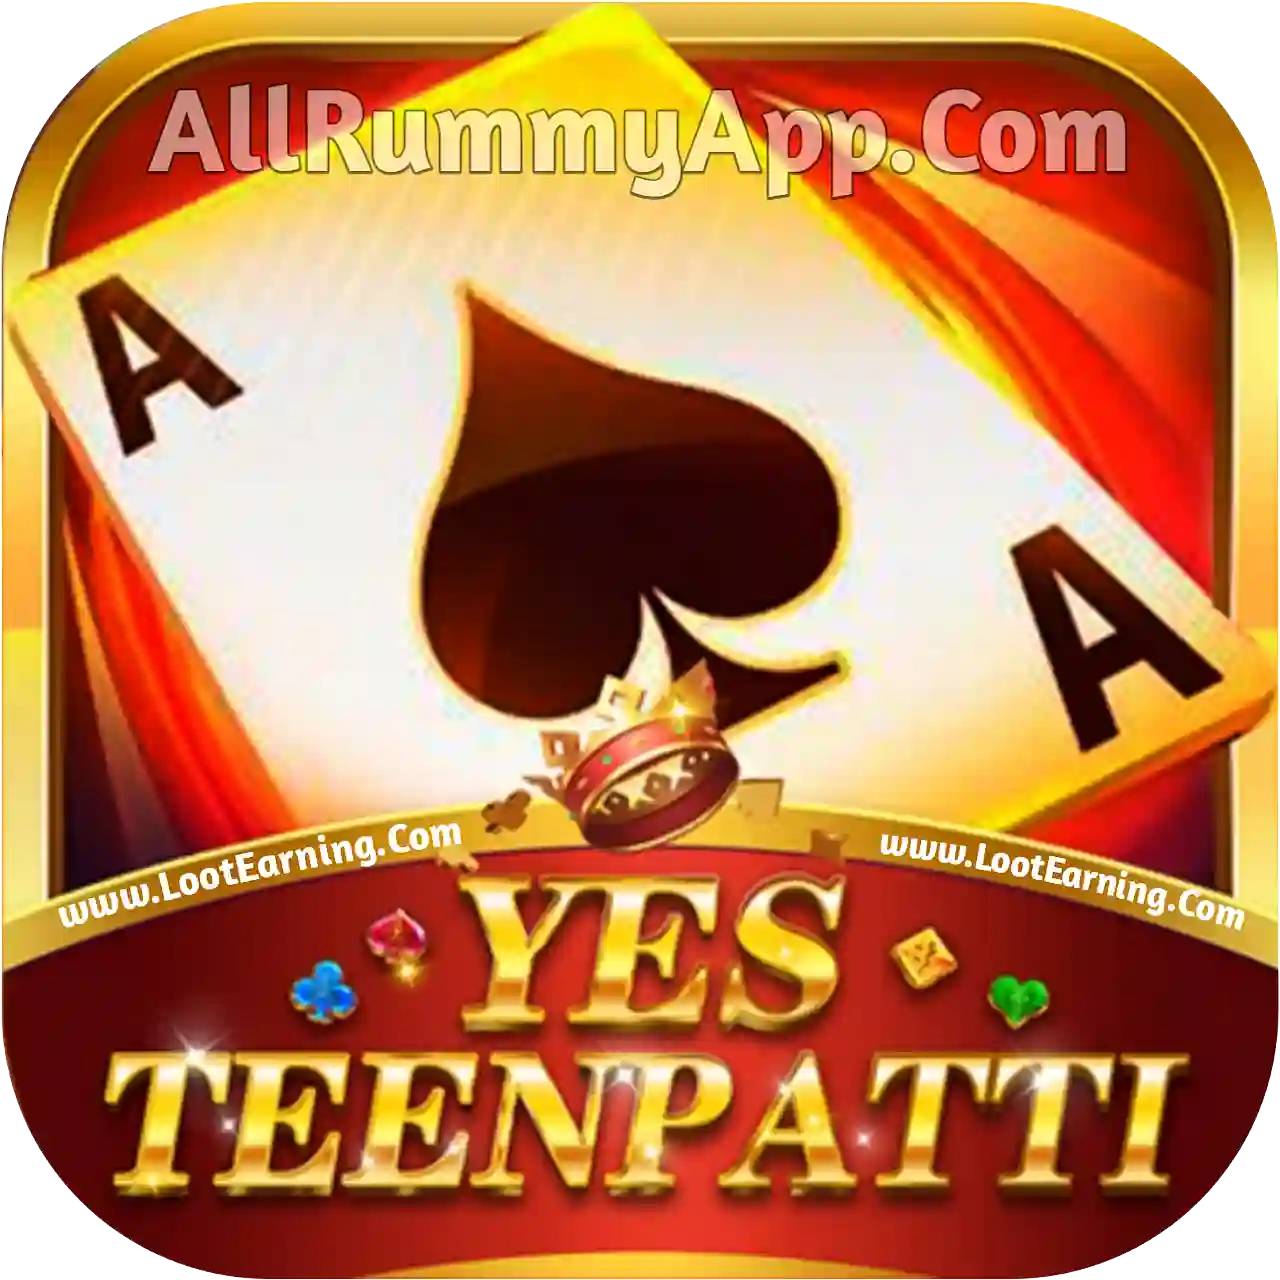 Teen Patti Yes - All Rummy Apps List ₹51 Bonus